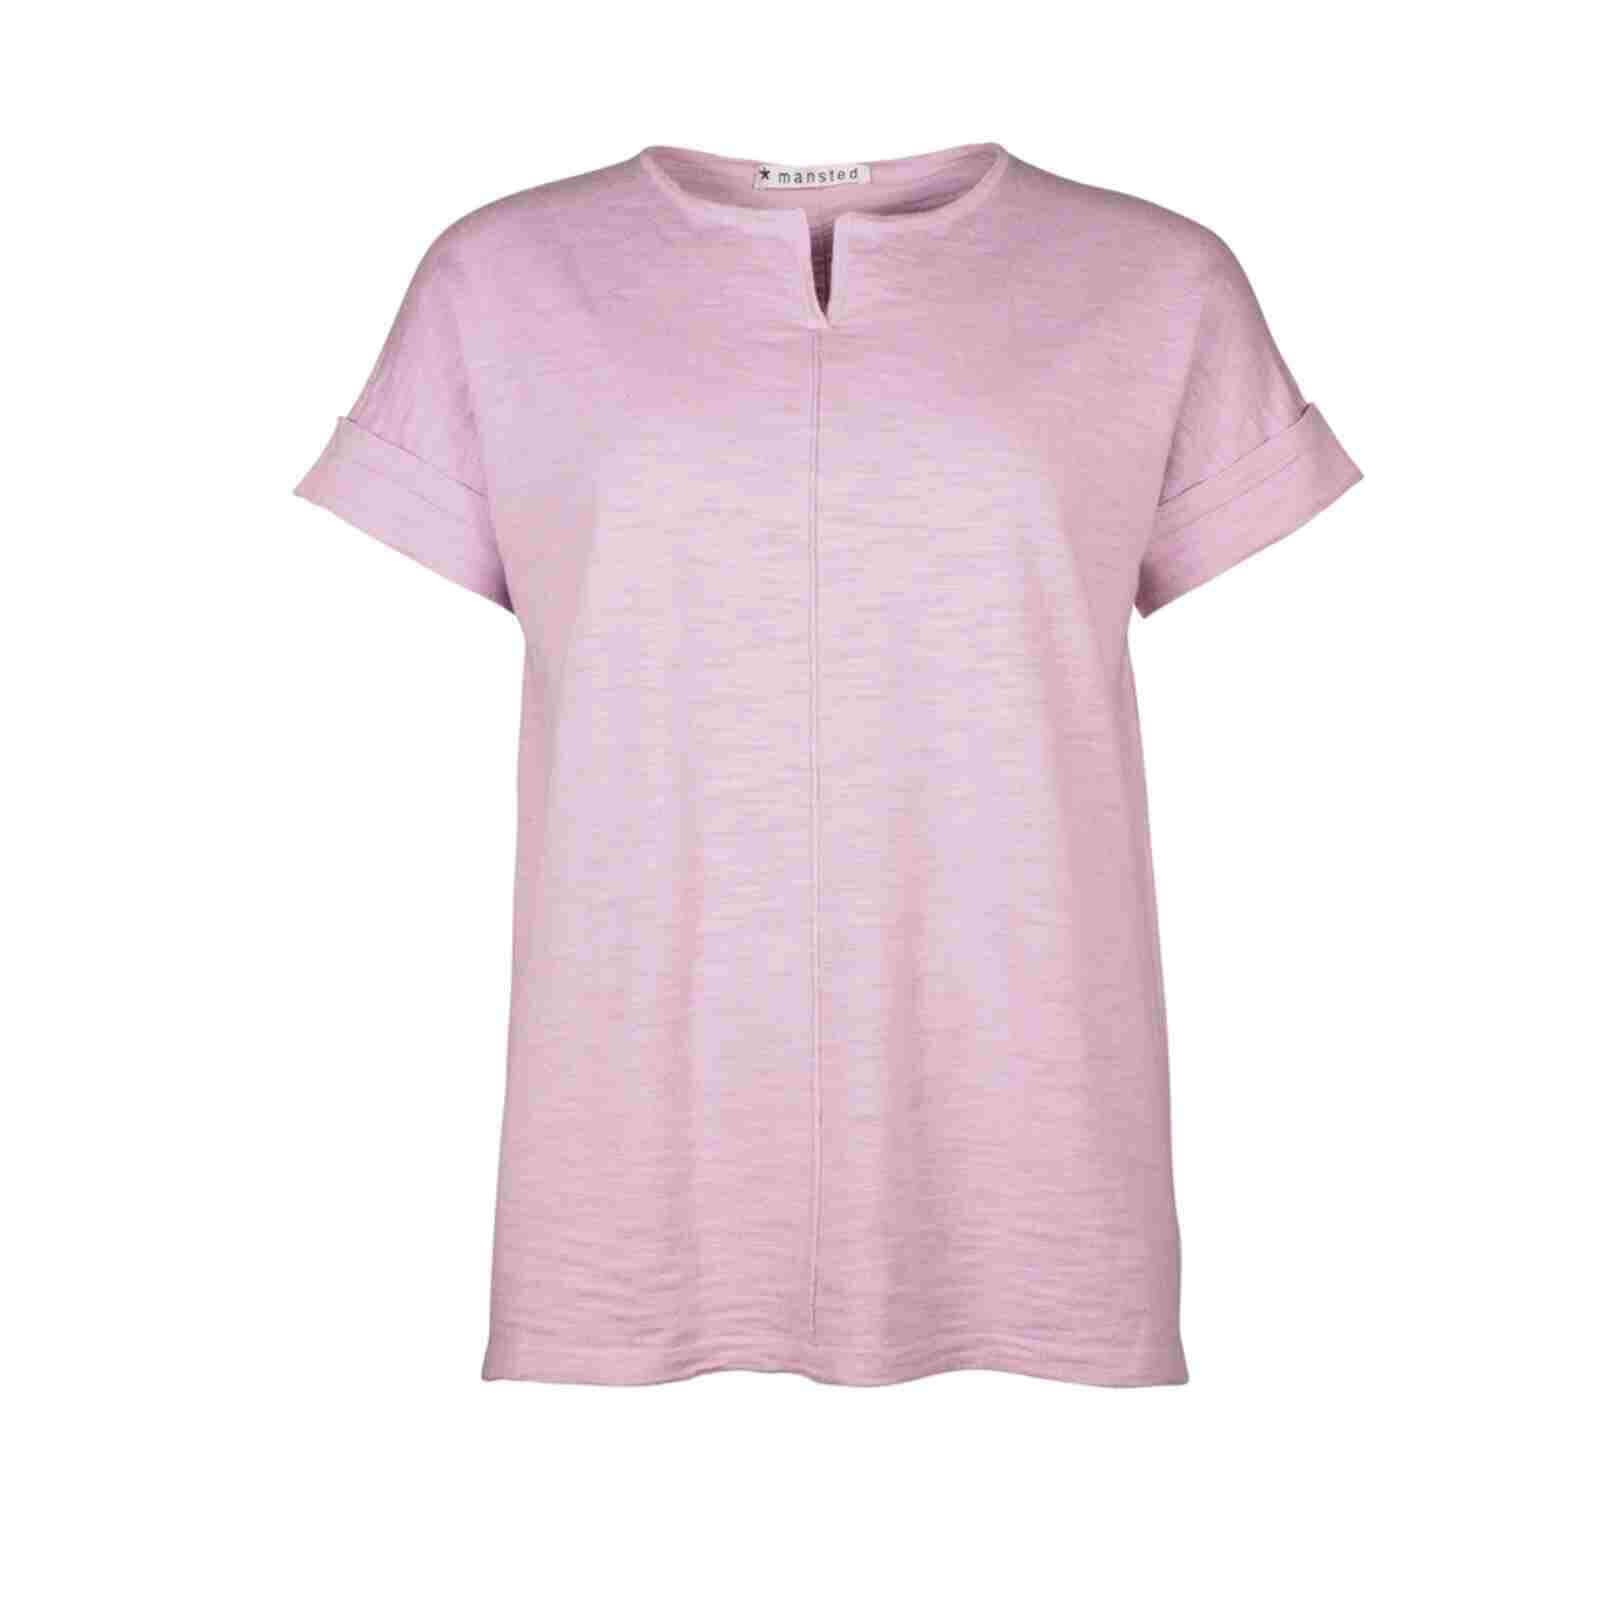 Kortærmet t-shirt i rosa fra Mansted, model Kerstin